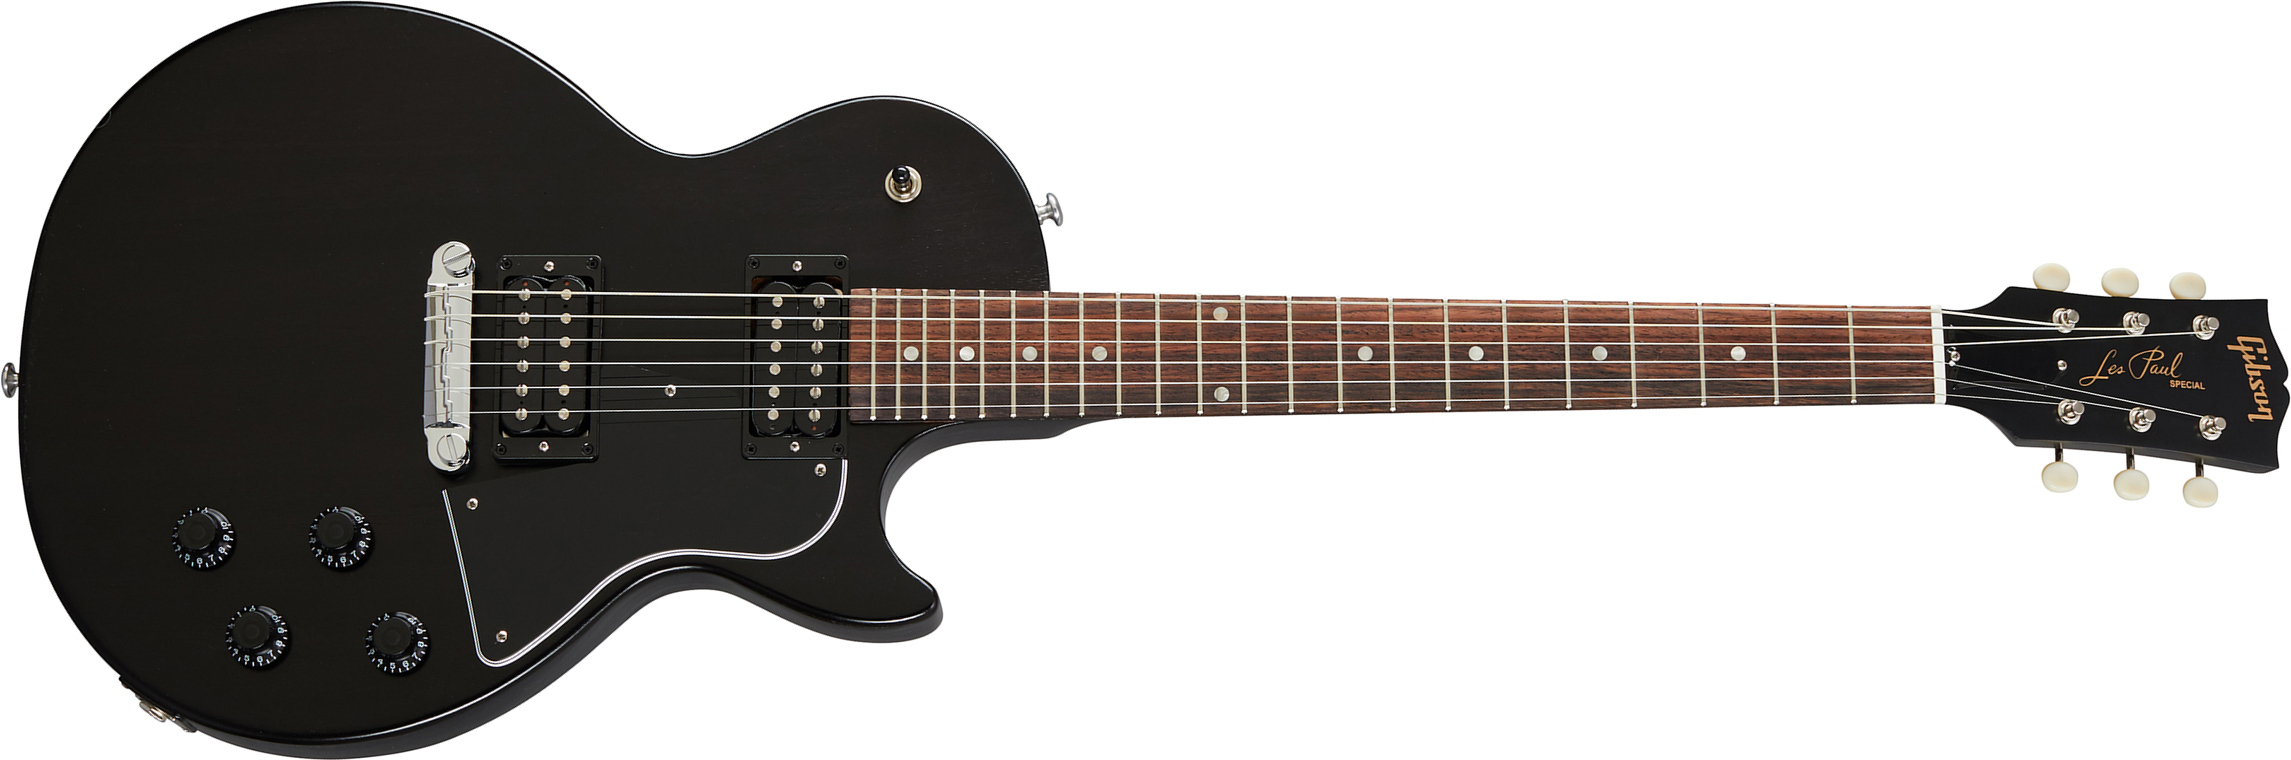 Gibson Les Paul Special Tribute Humbucker Modern 2020 2h Ht Rw - Ebony Vintage Gloss - Guitare Électrique Single Cut - Main picture